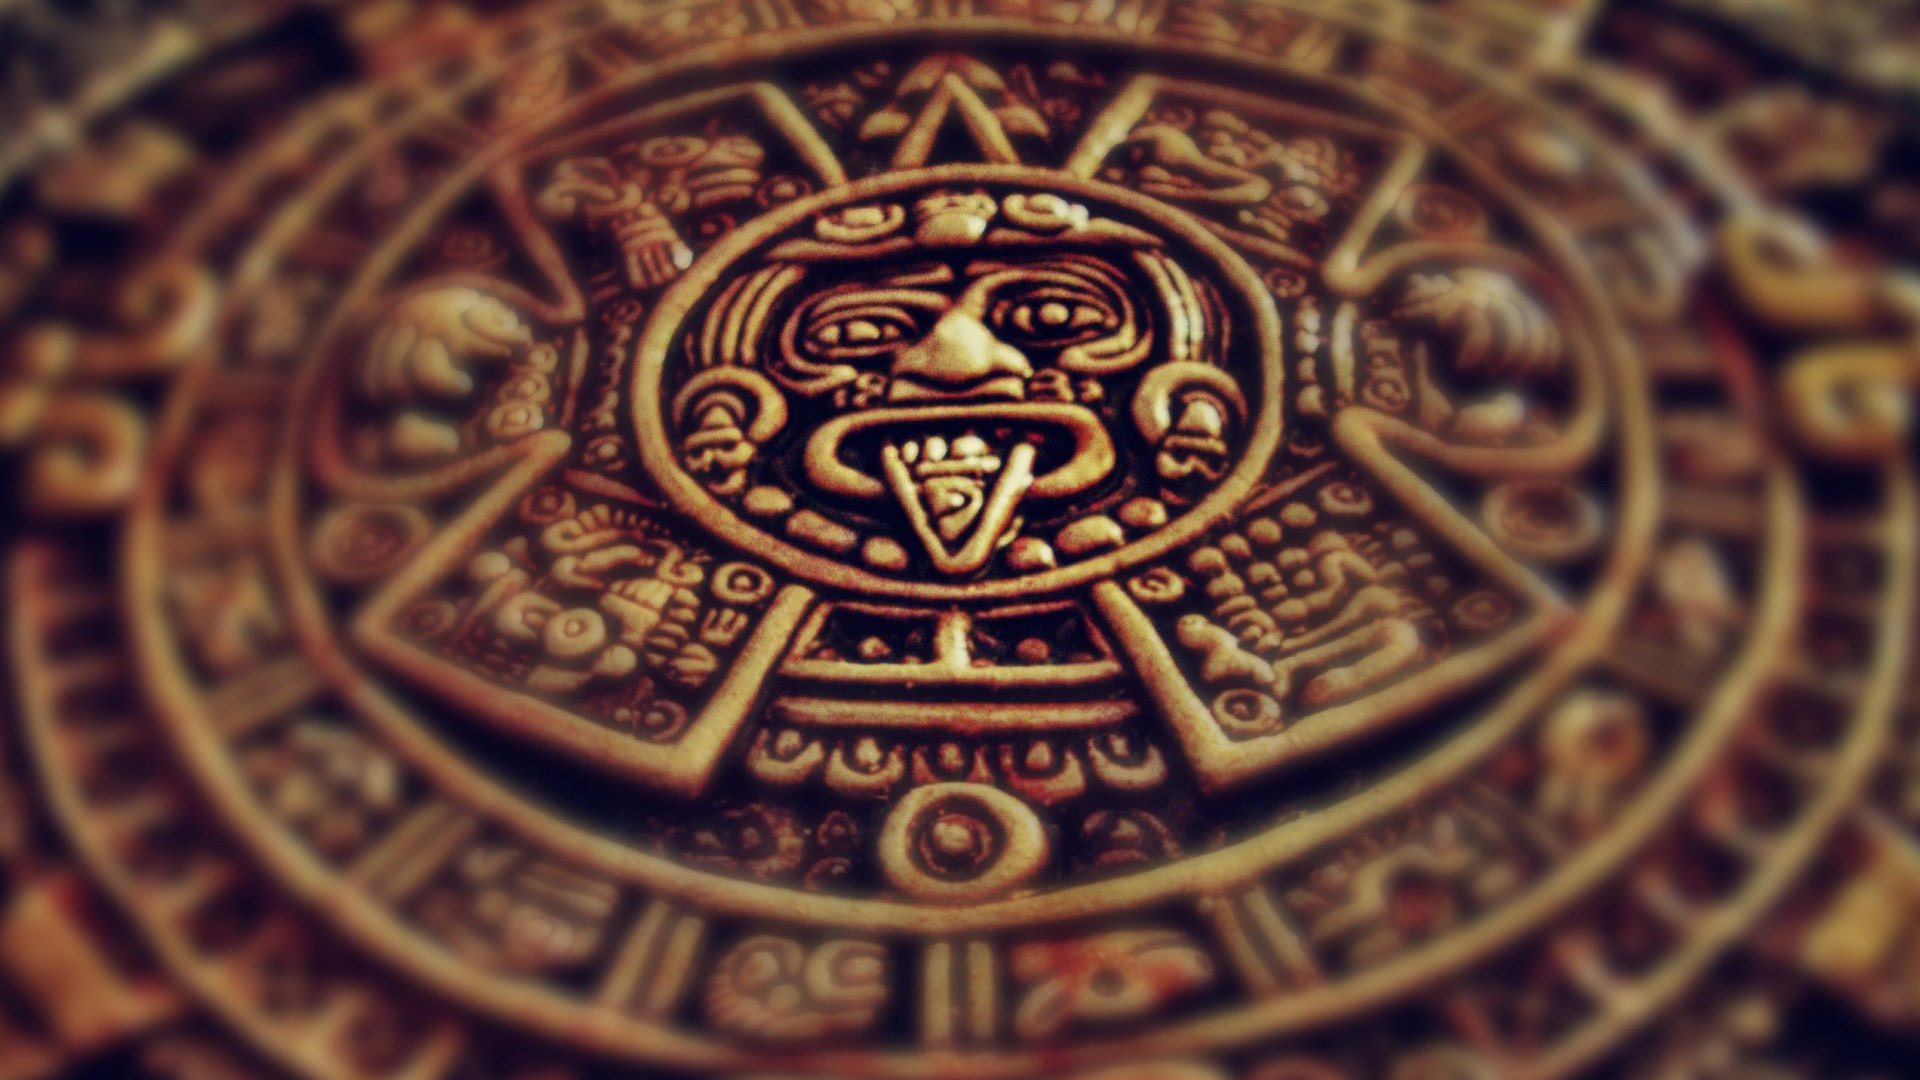 Mayan Wallpaper Image Gallery - Photonesta